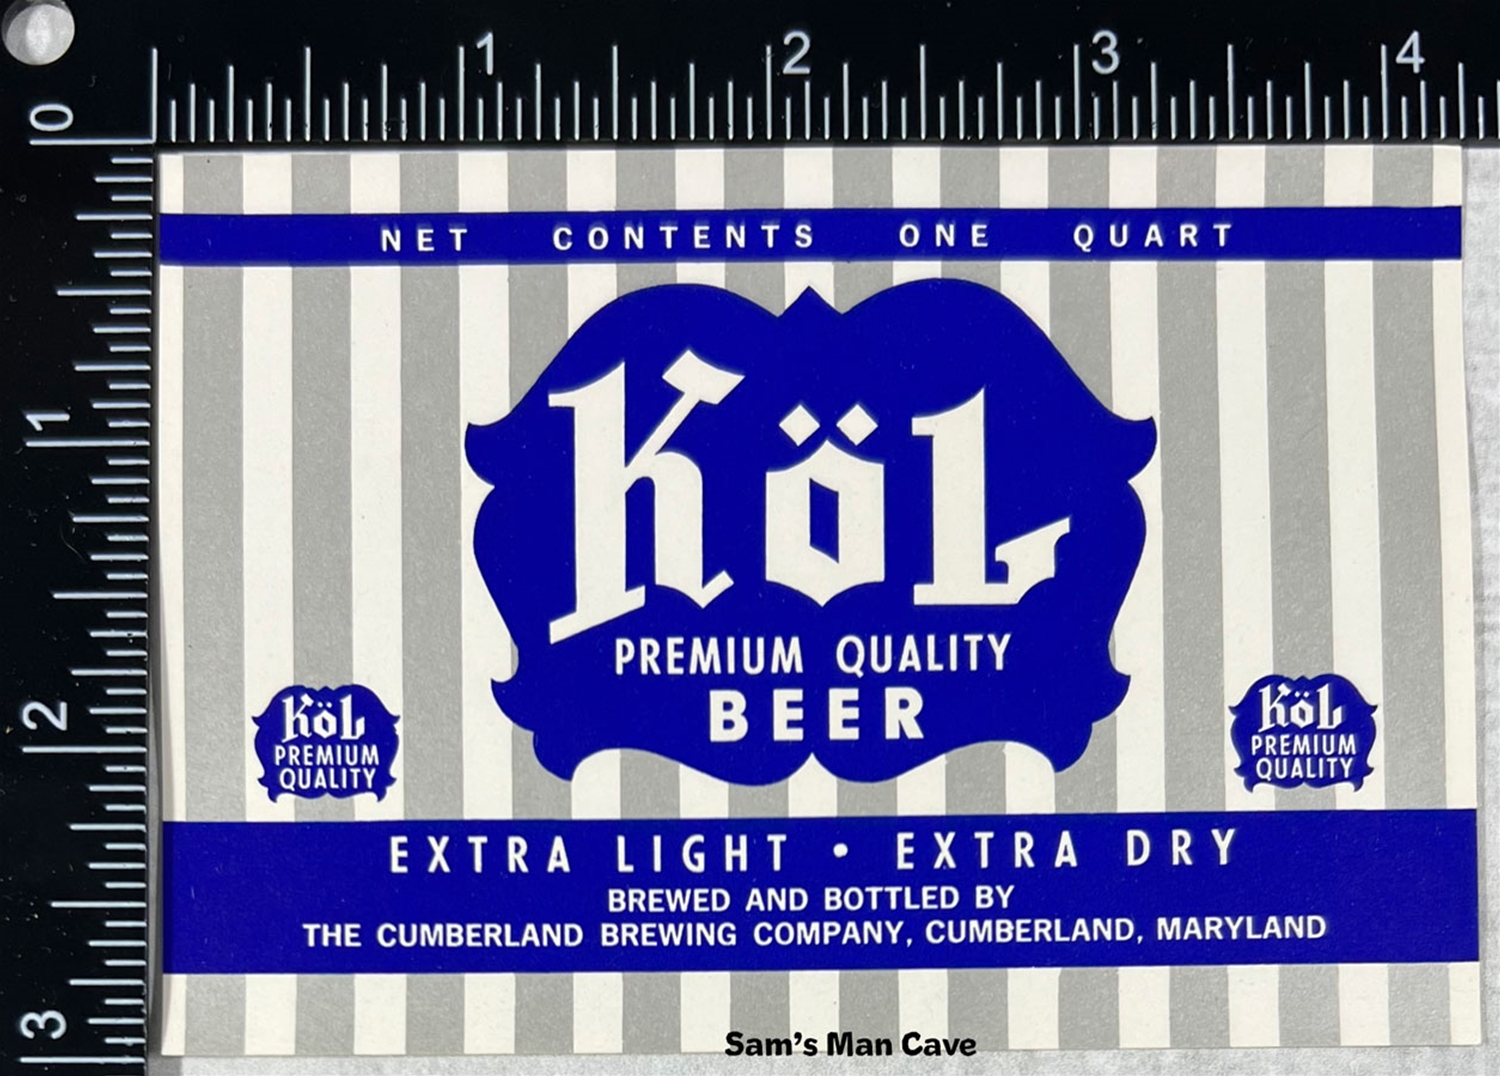 Kol Premium Quality Beer Label